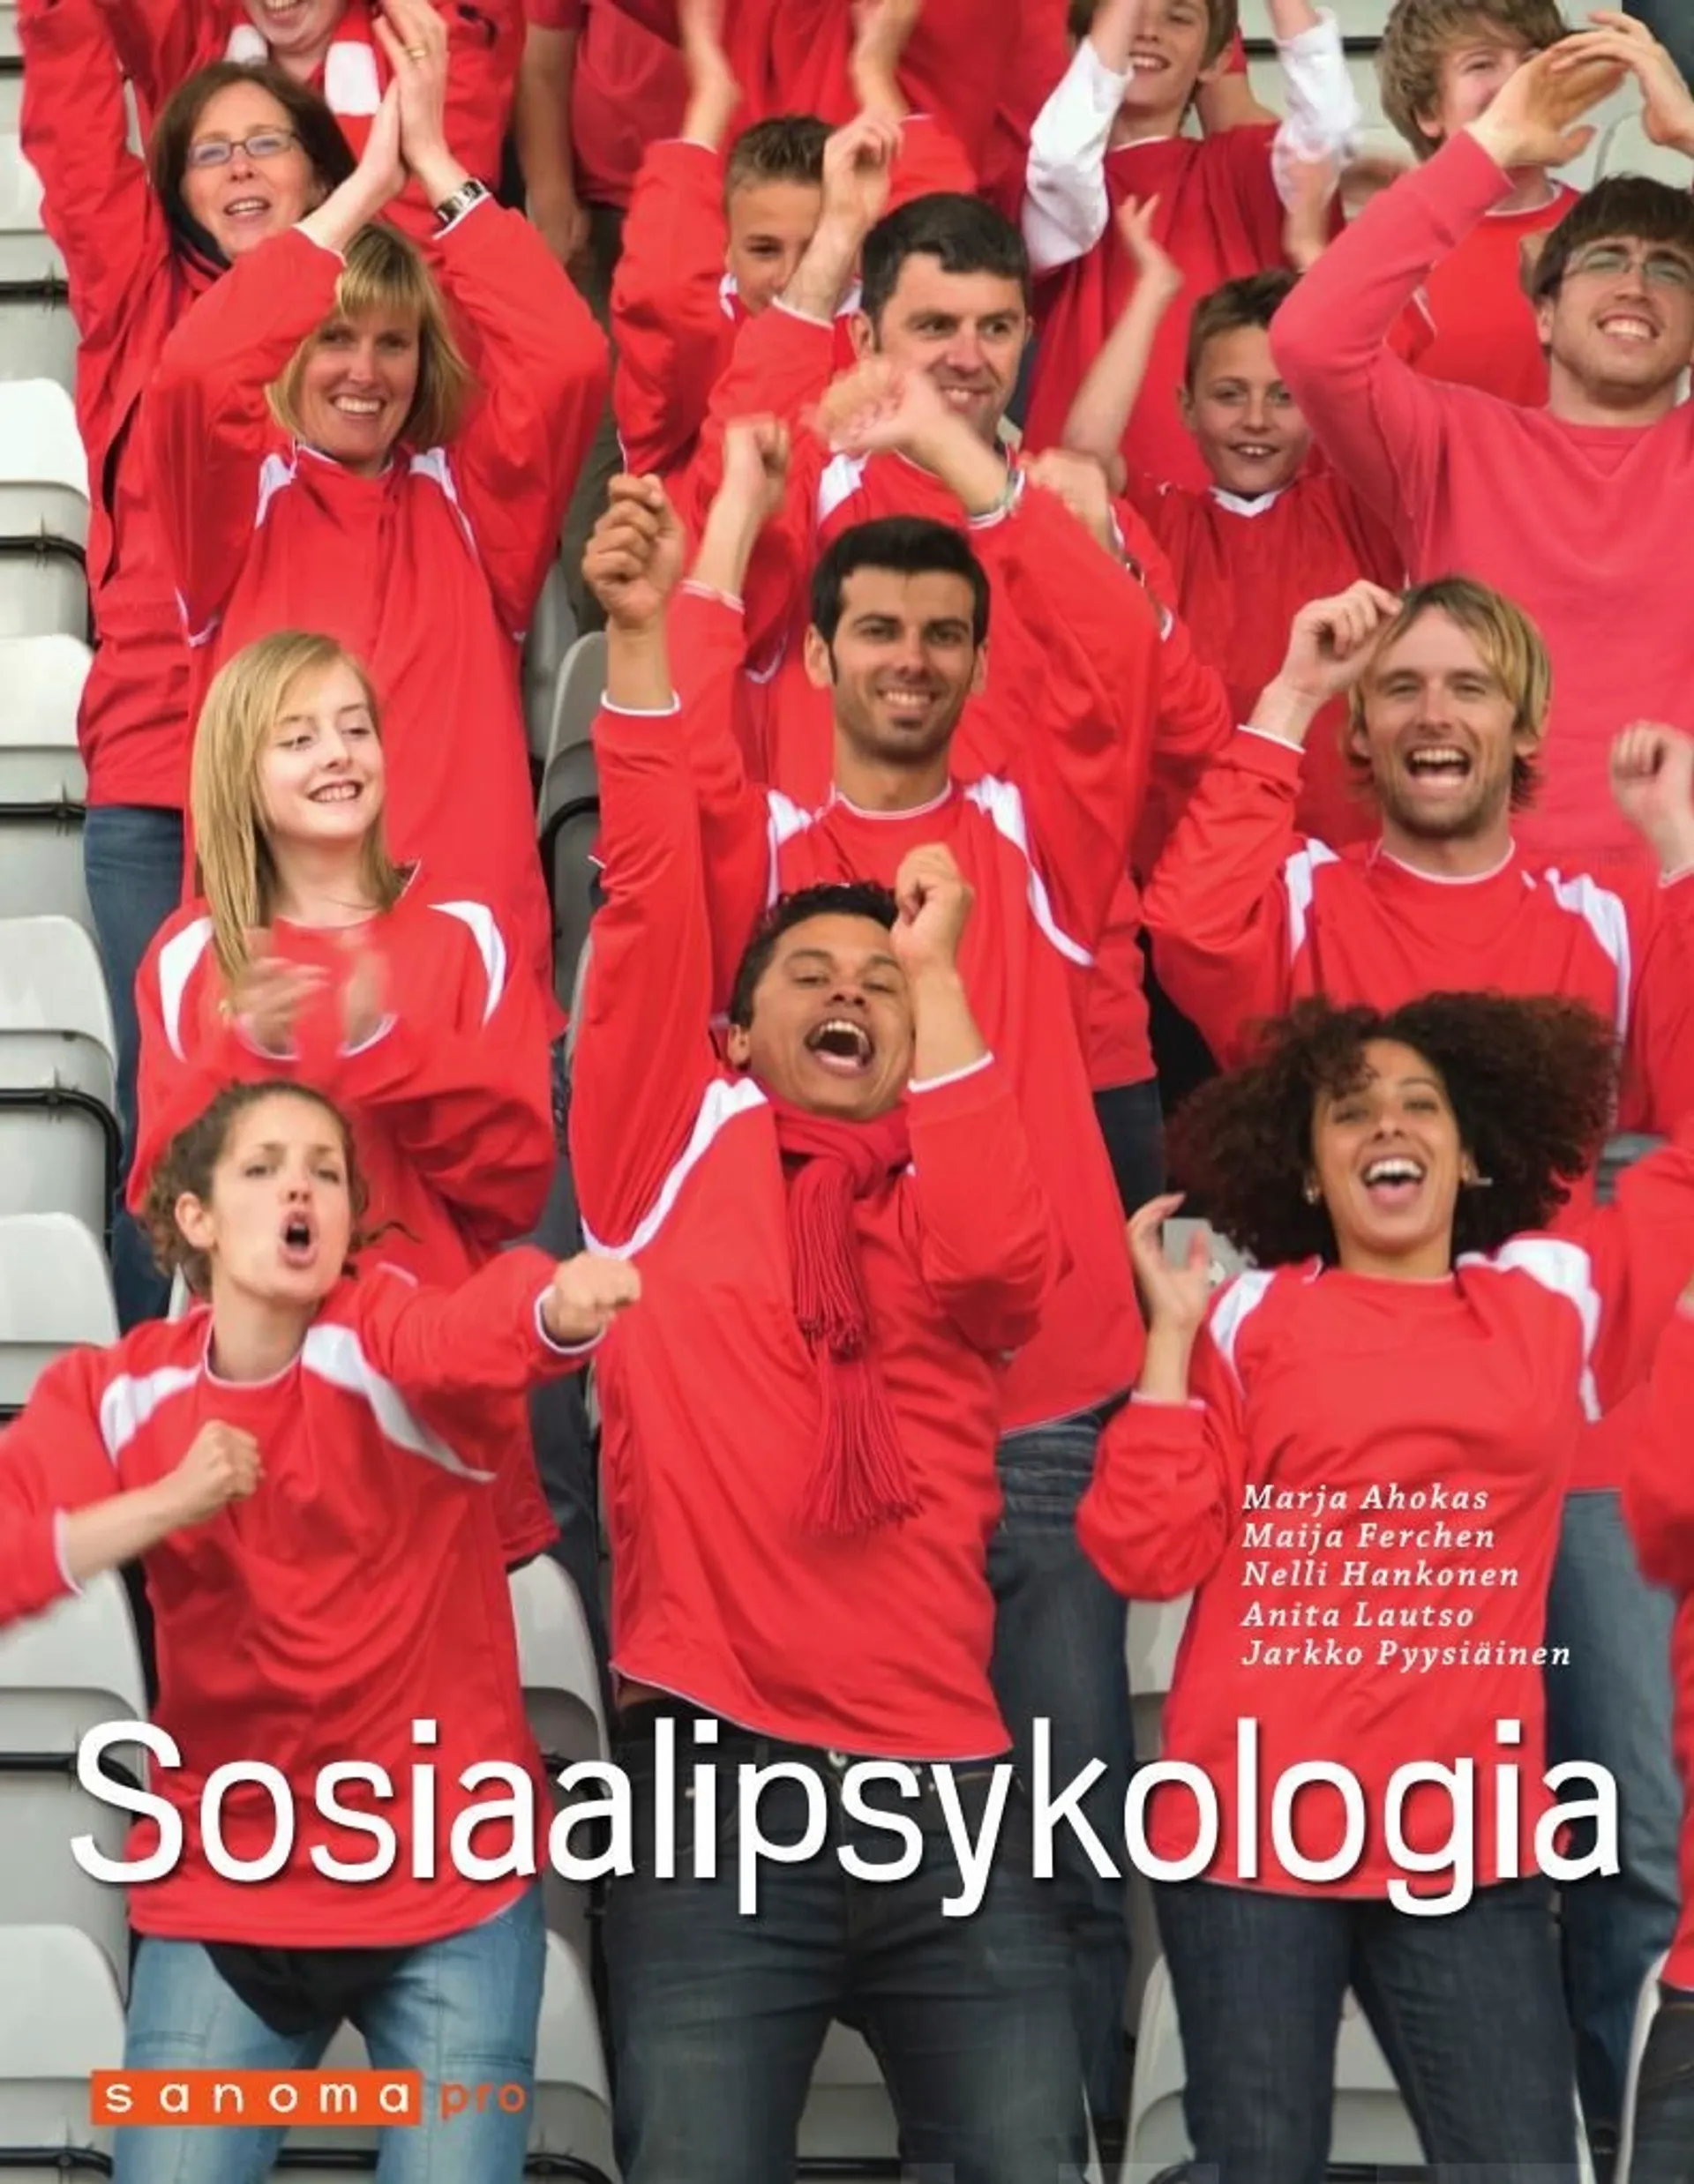 Ahokas, Sosiaalipsykologia (LOPS 16)